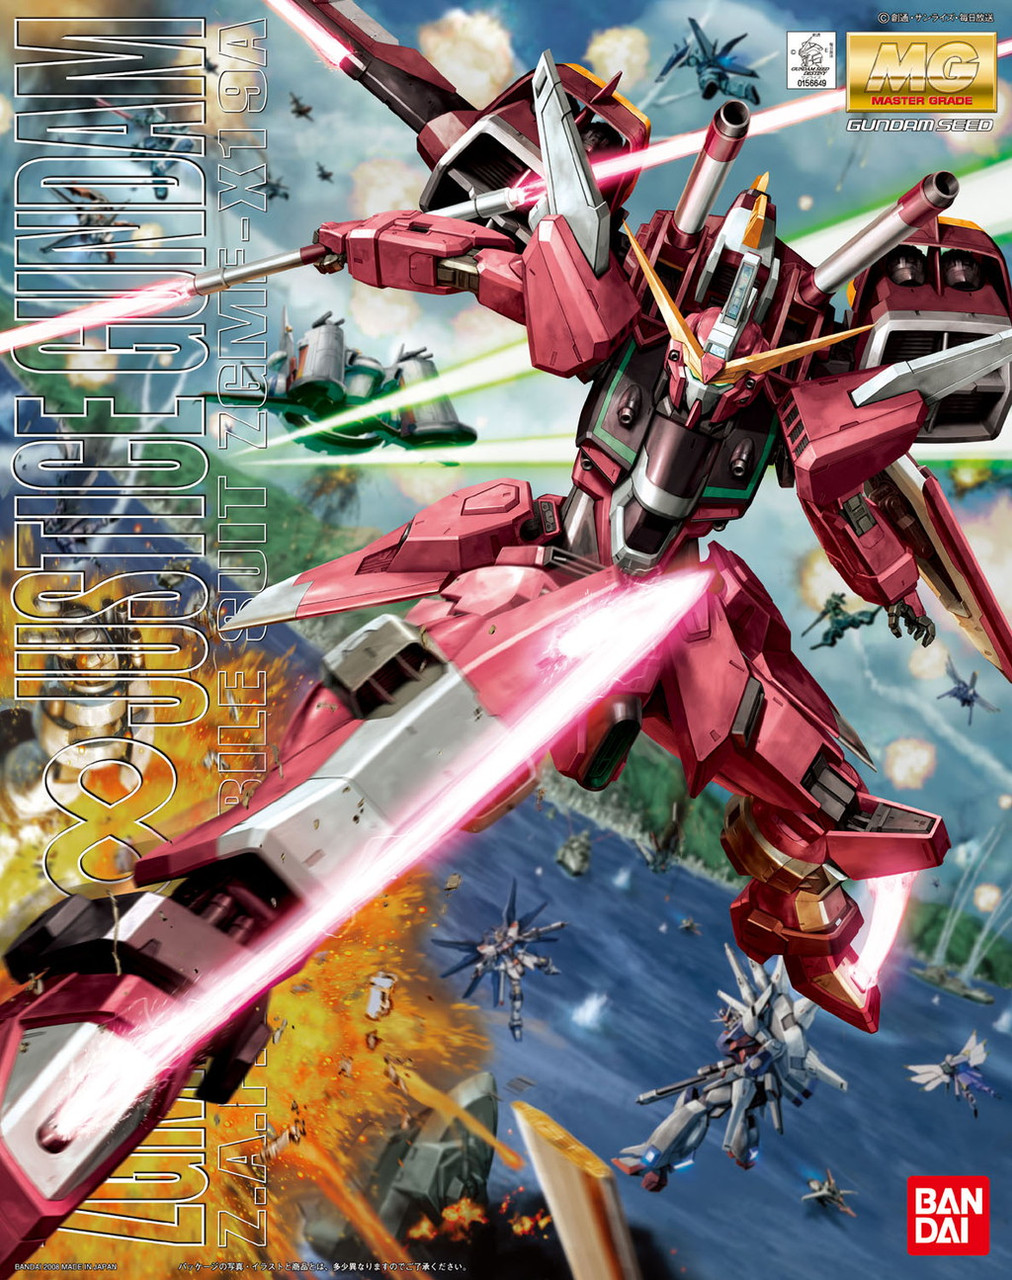 GUNDAM - 1/100 Chaos Gundam - Model Kit